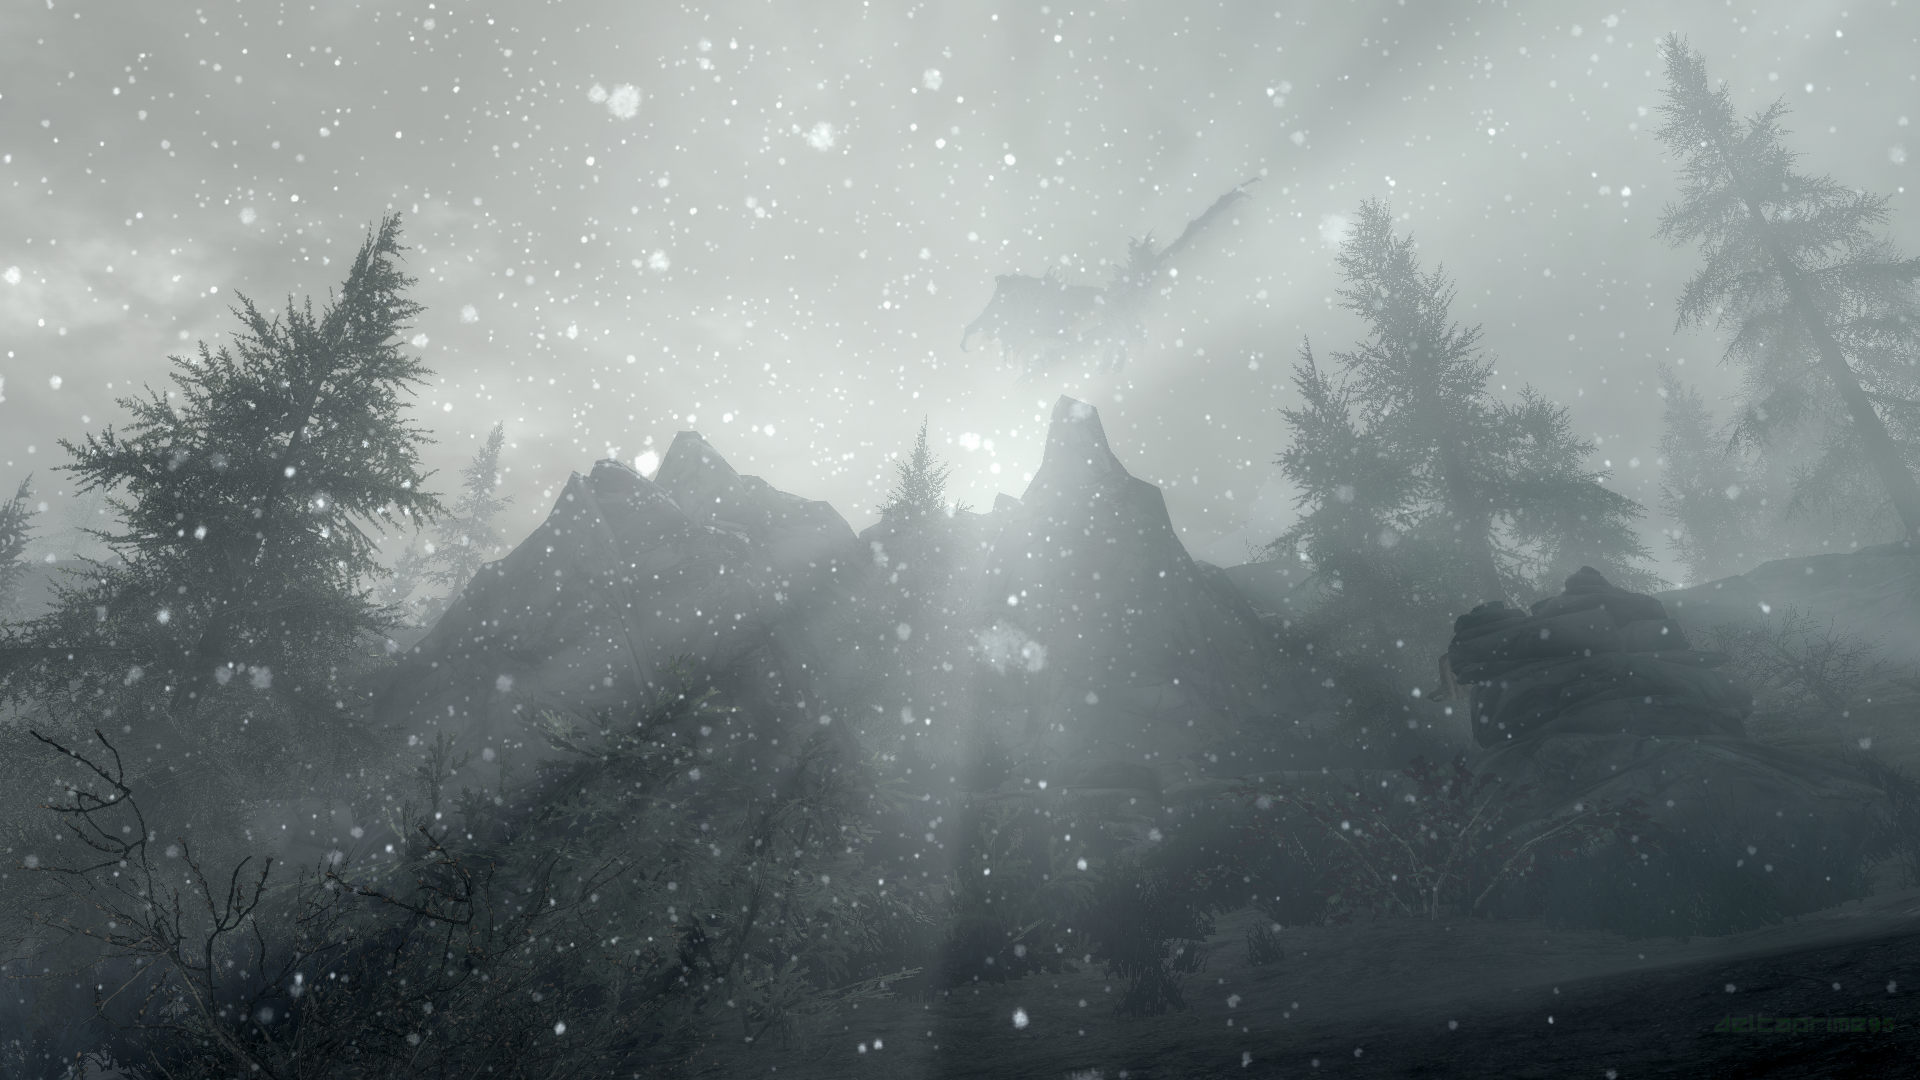 Skyrim Remastered The Elder Scrolls V Skyrim Alduin Dragon Snowstorm Snow Sun Rays Mountains PC Gami 1920x1080